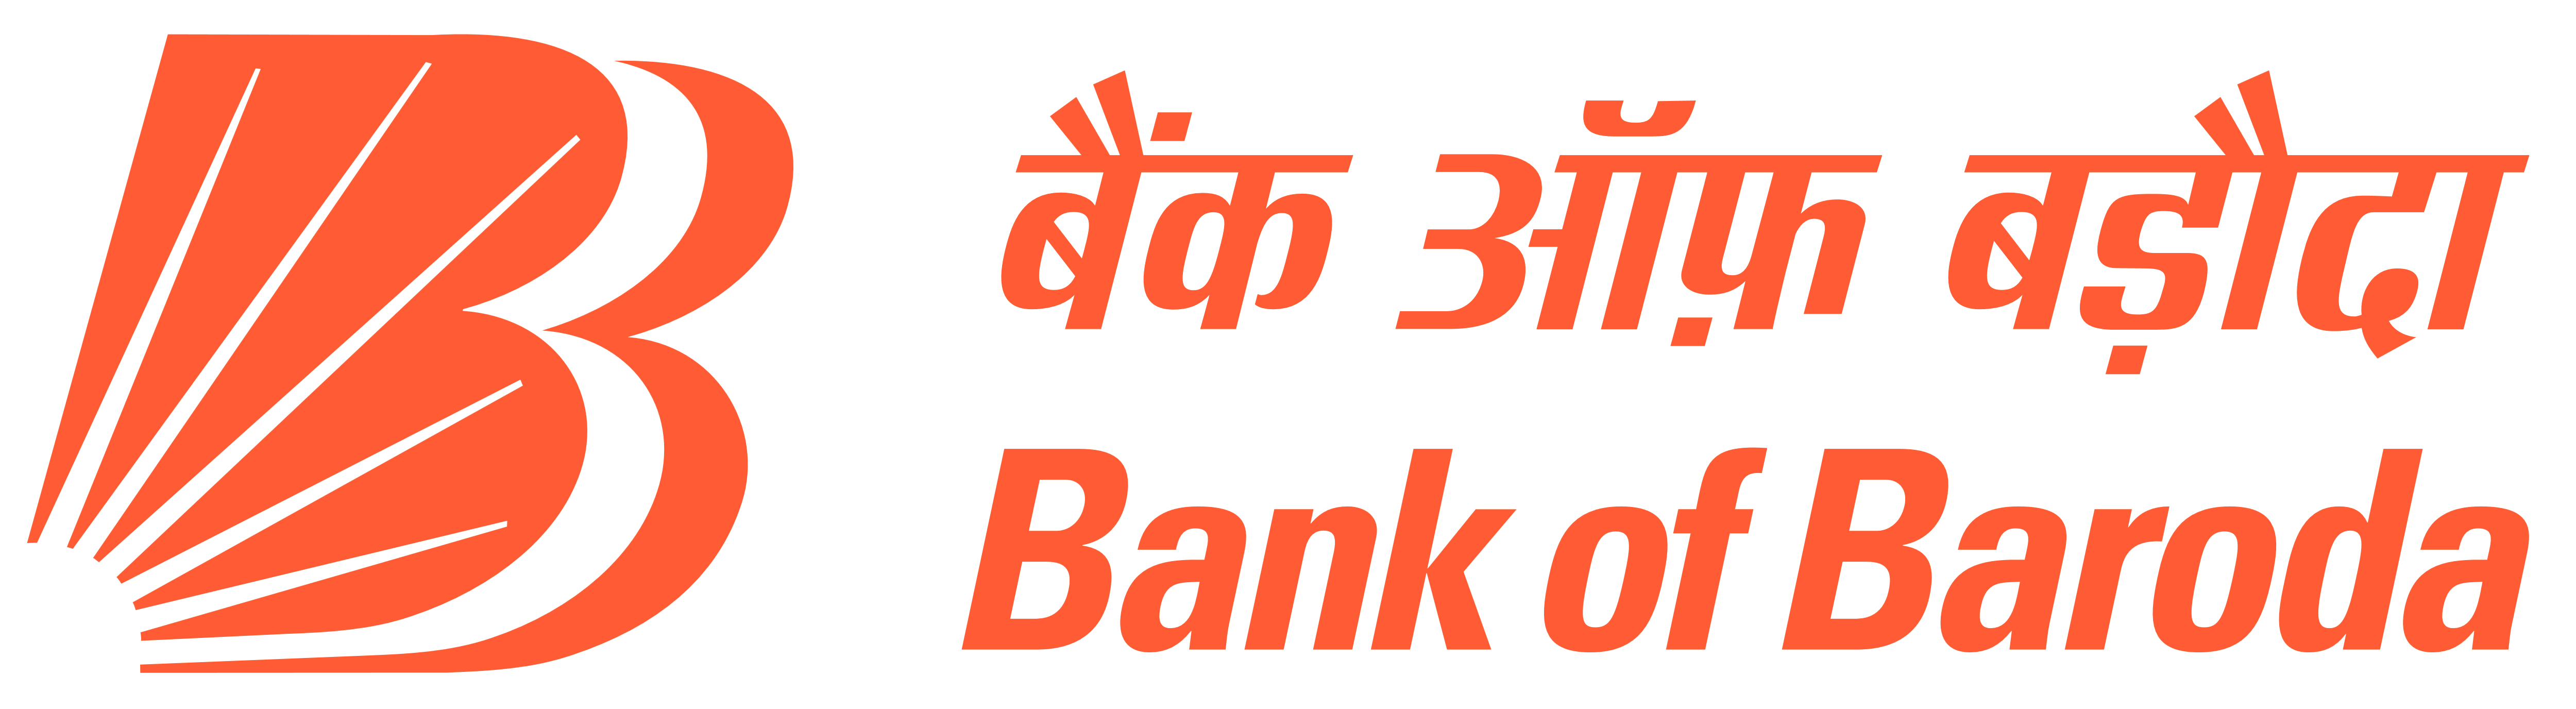 Bob Logo - Bank of Baroda – Logos Download